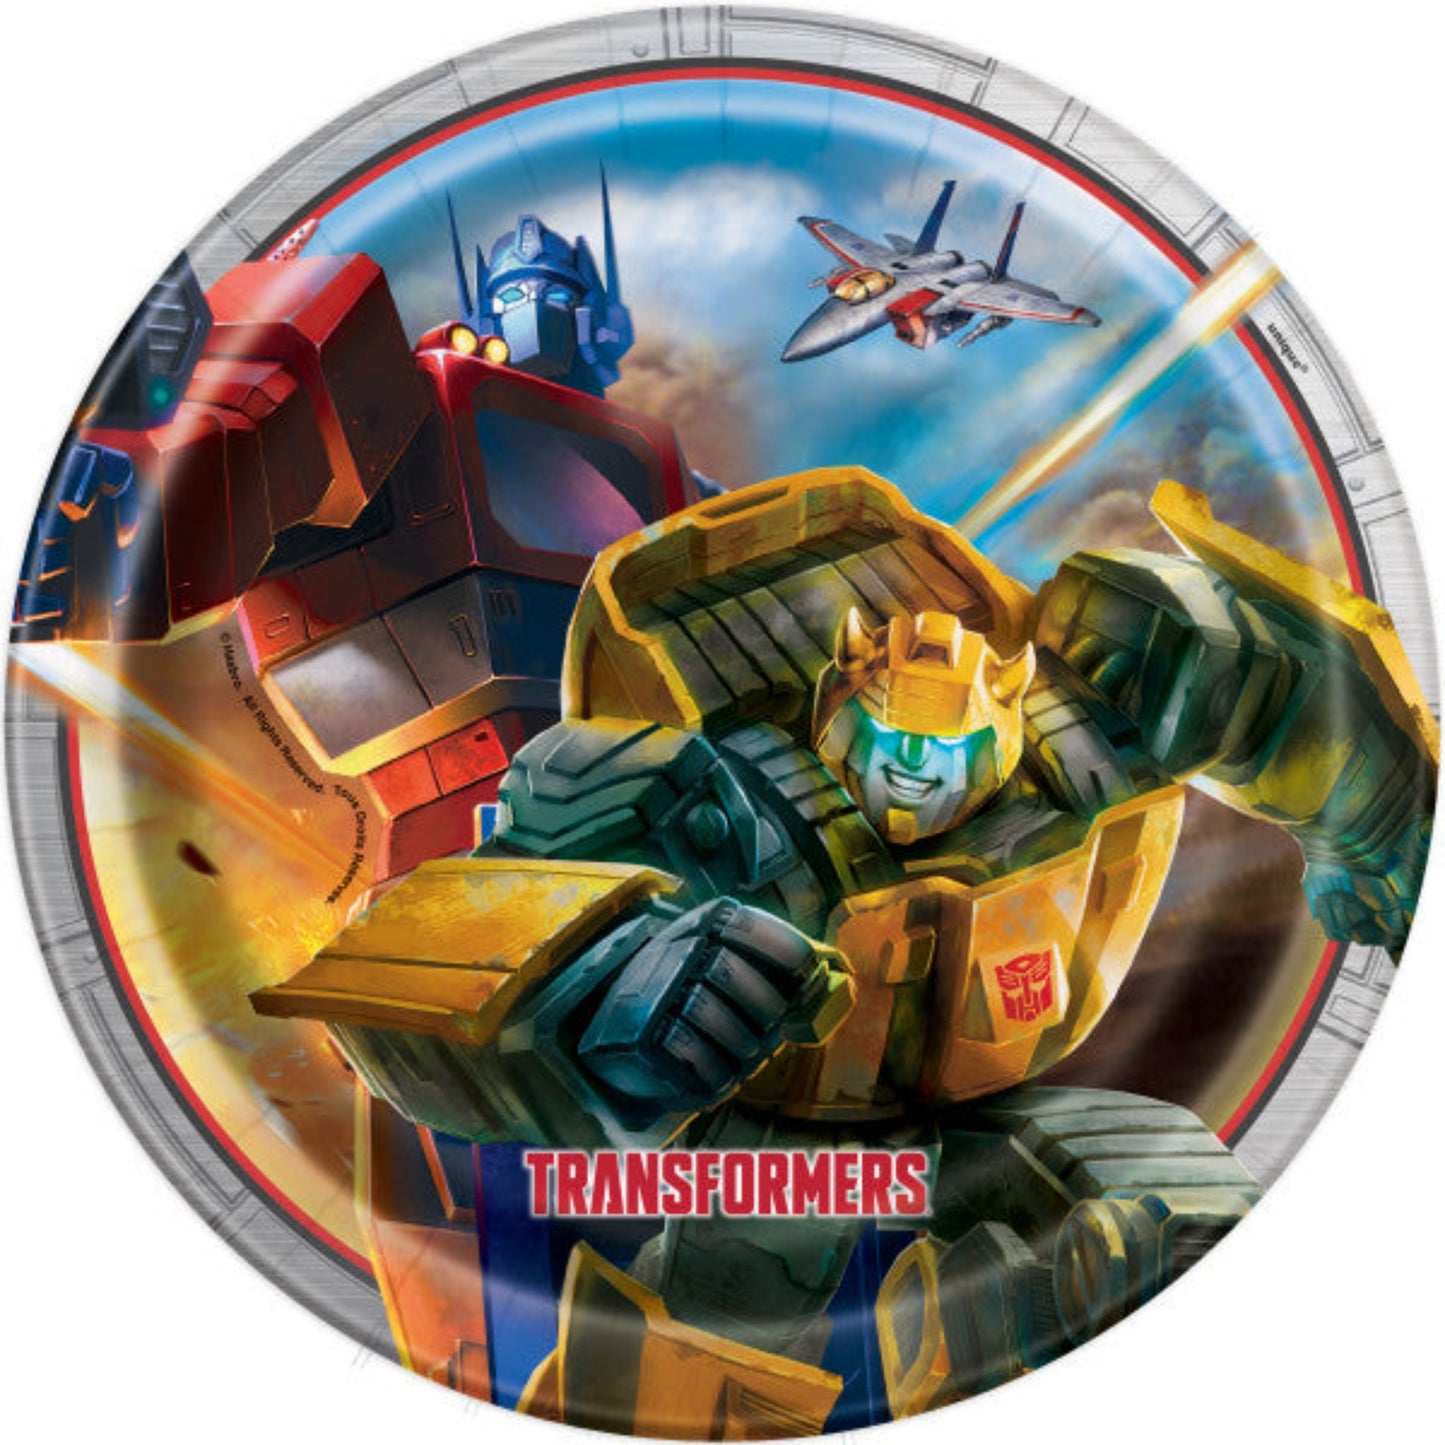 Transformers Dinner Plates